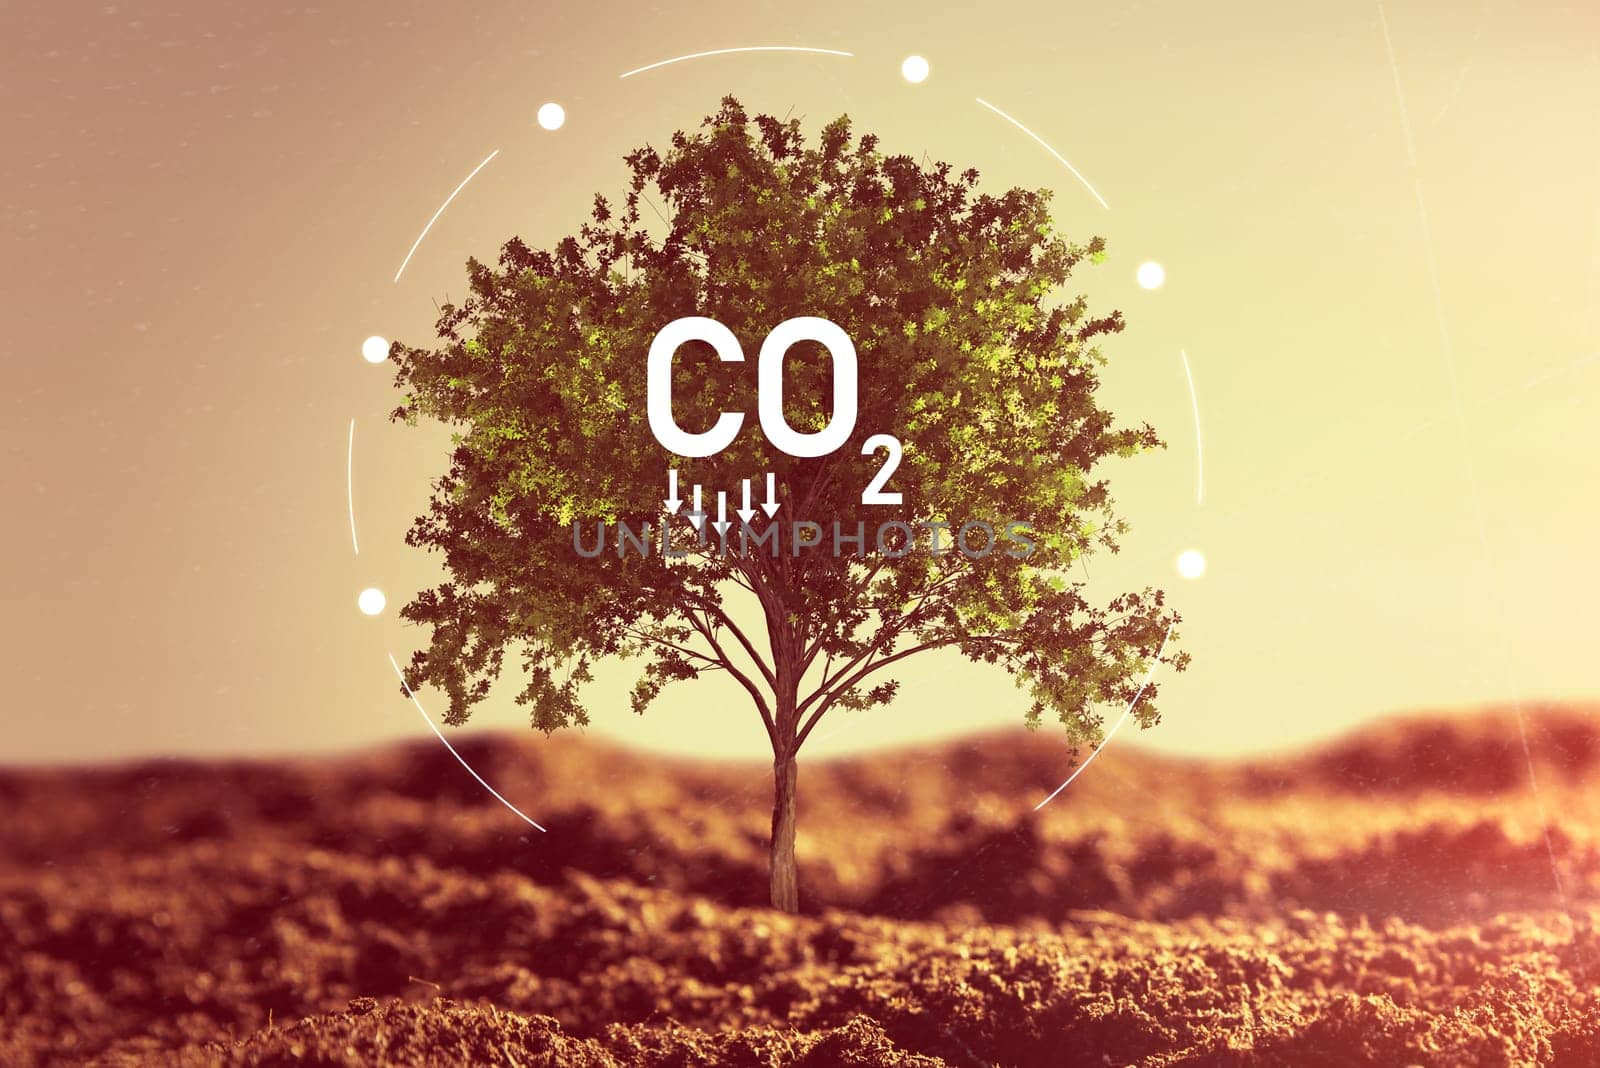 Carbon dioxide emissions, carbon footprint concept by simpson33